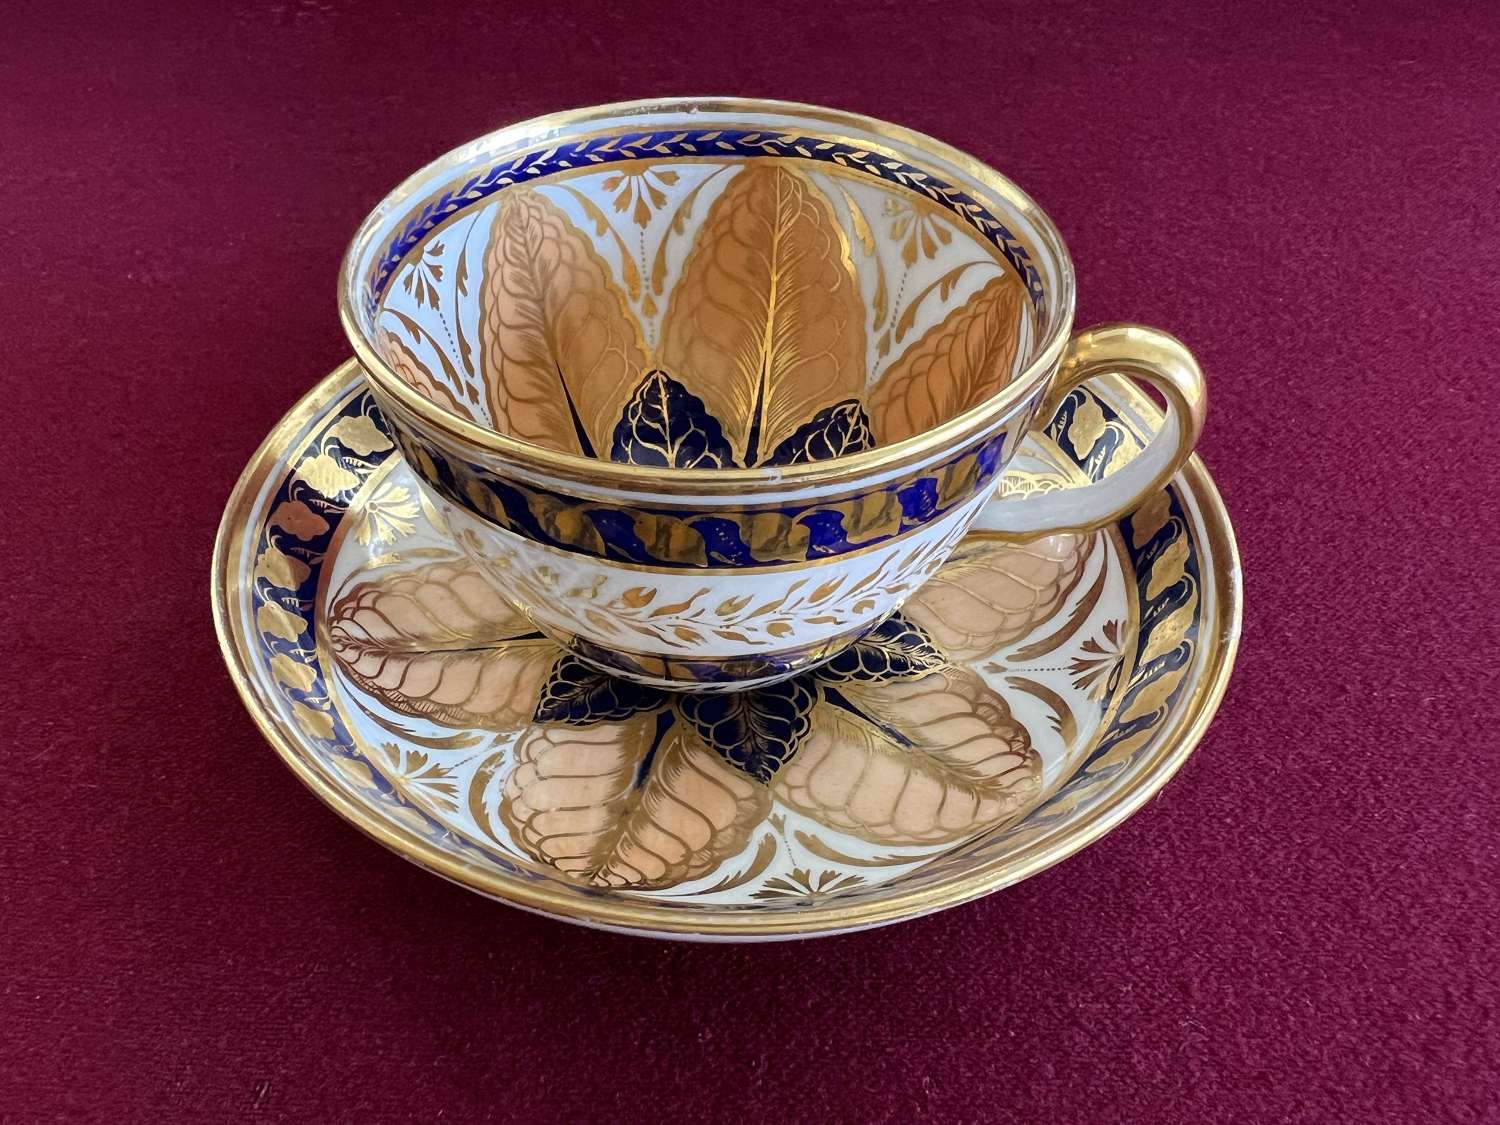 A Job Ridgway & Sons Porcelain Tea Cup & Saucer c.1808-1812